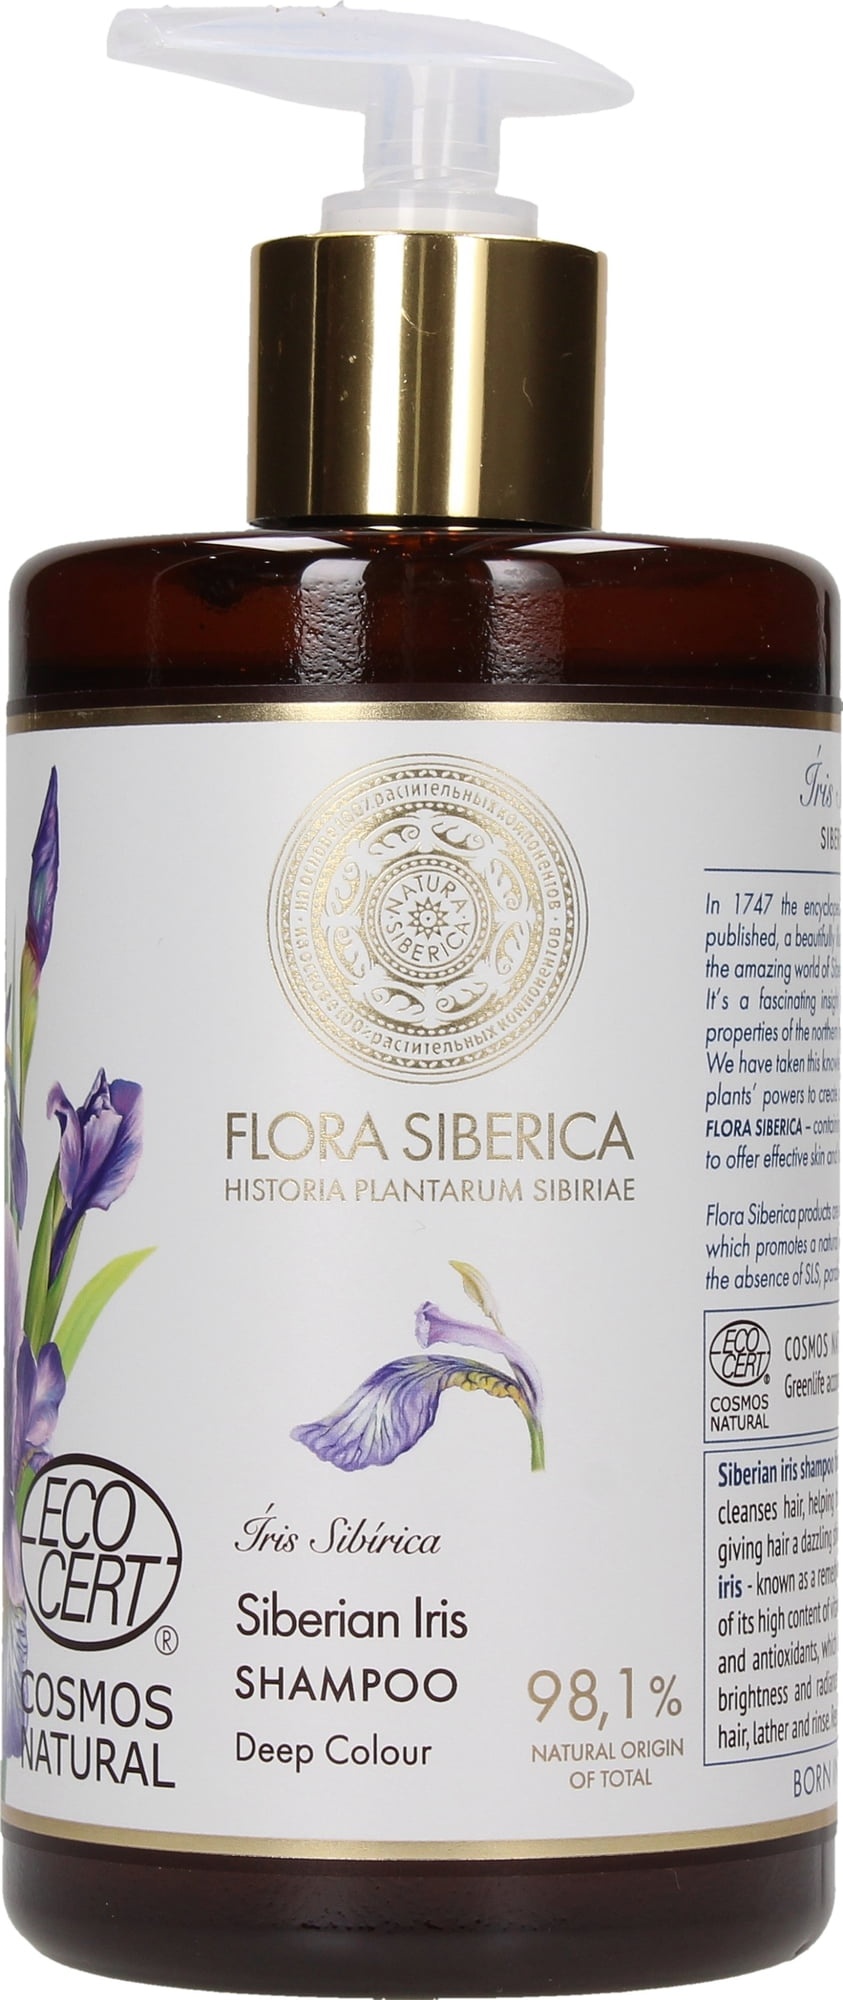 Flora Siberica Siberian Iris Shampoo